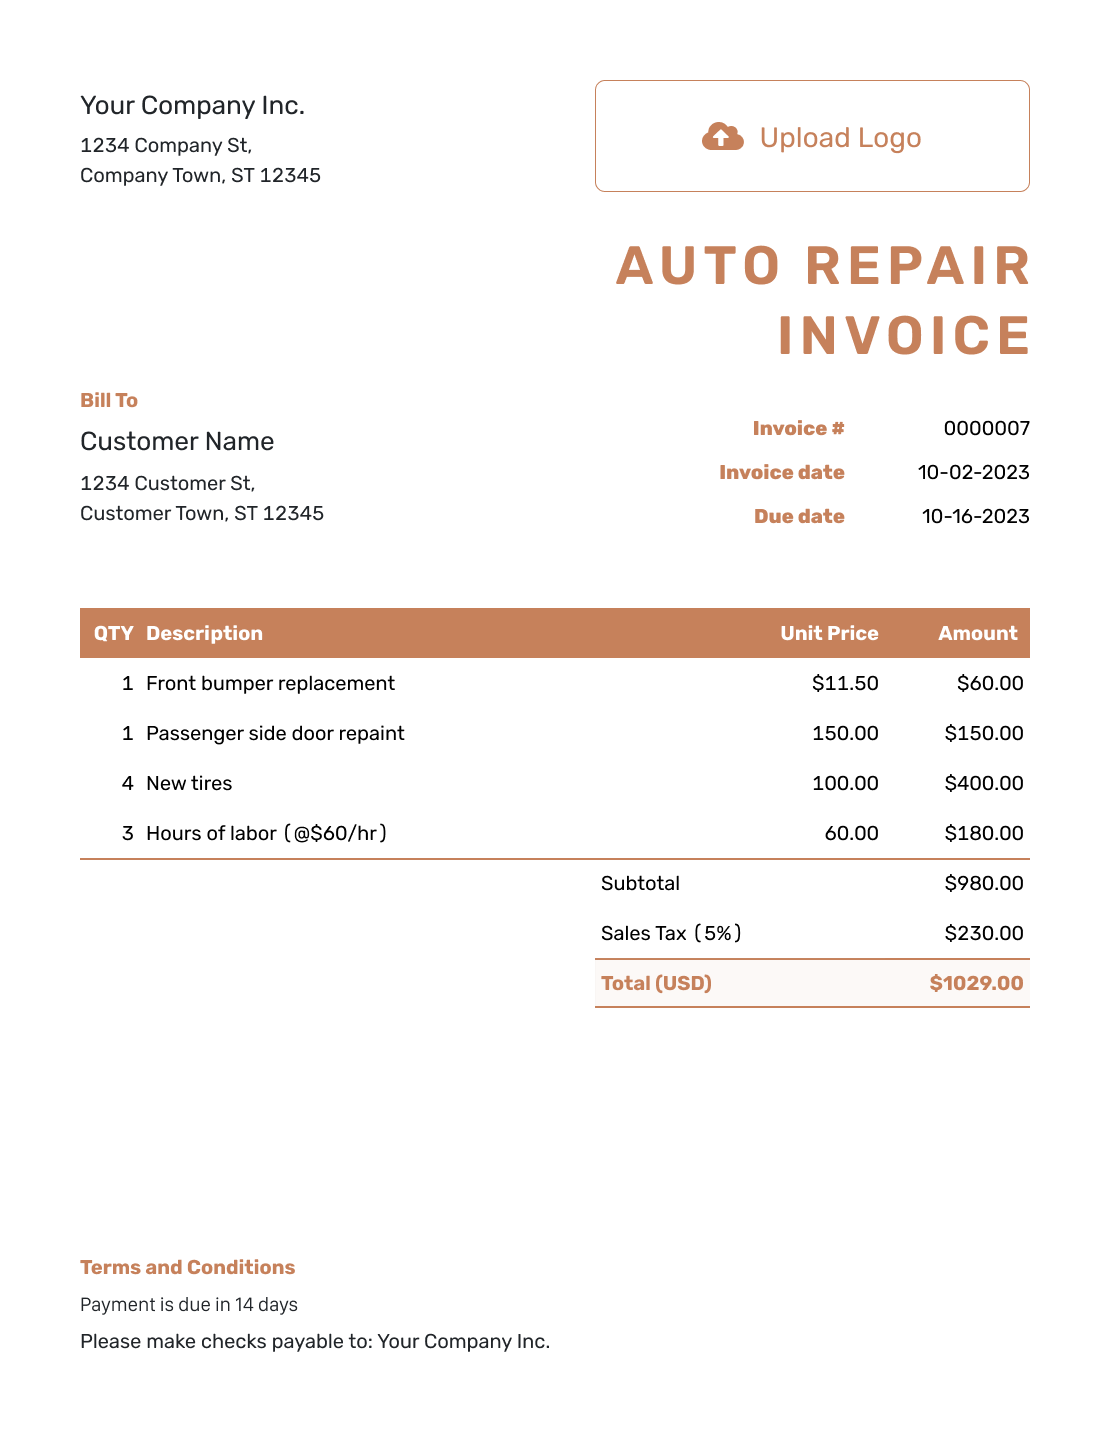 Standard Auto Repair Invoice Template